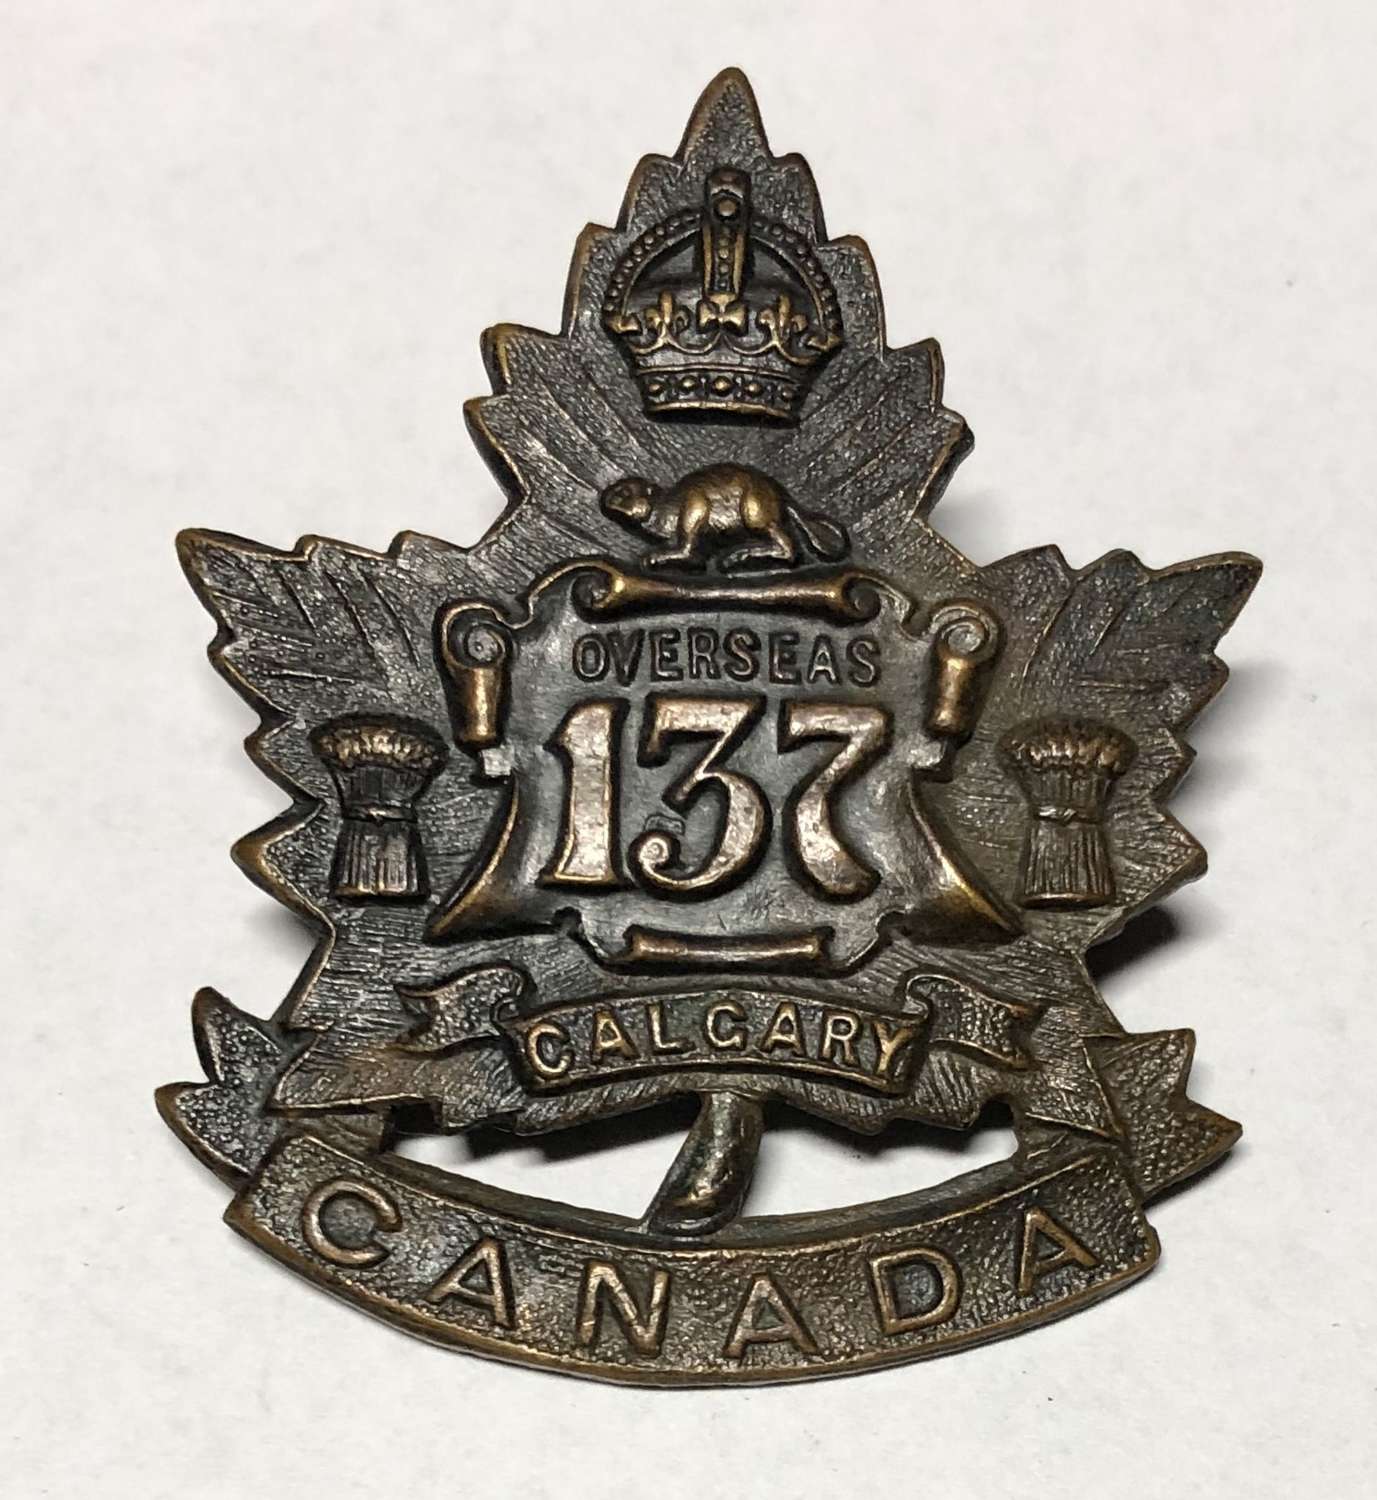 Canada. 137th Battalion (Calgary, Alberta) CEF WW1 cap badge